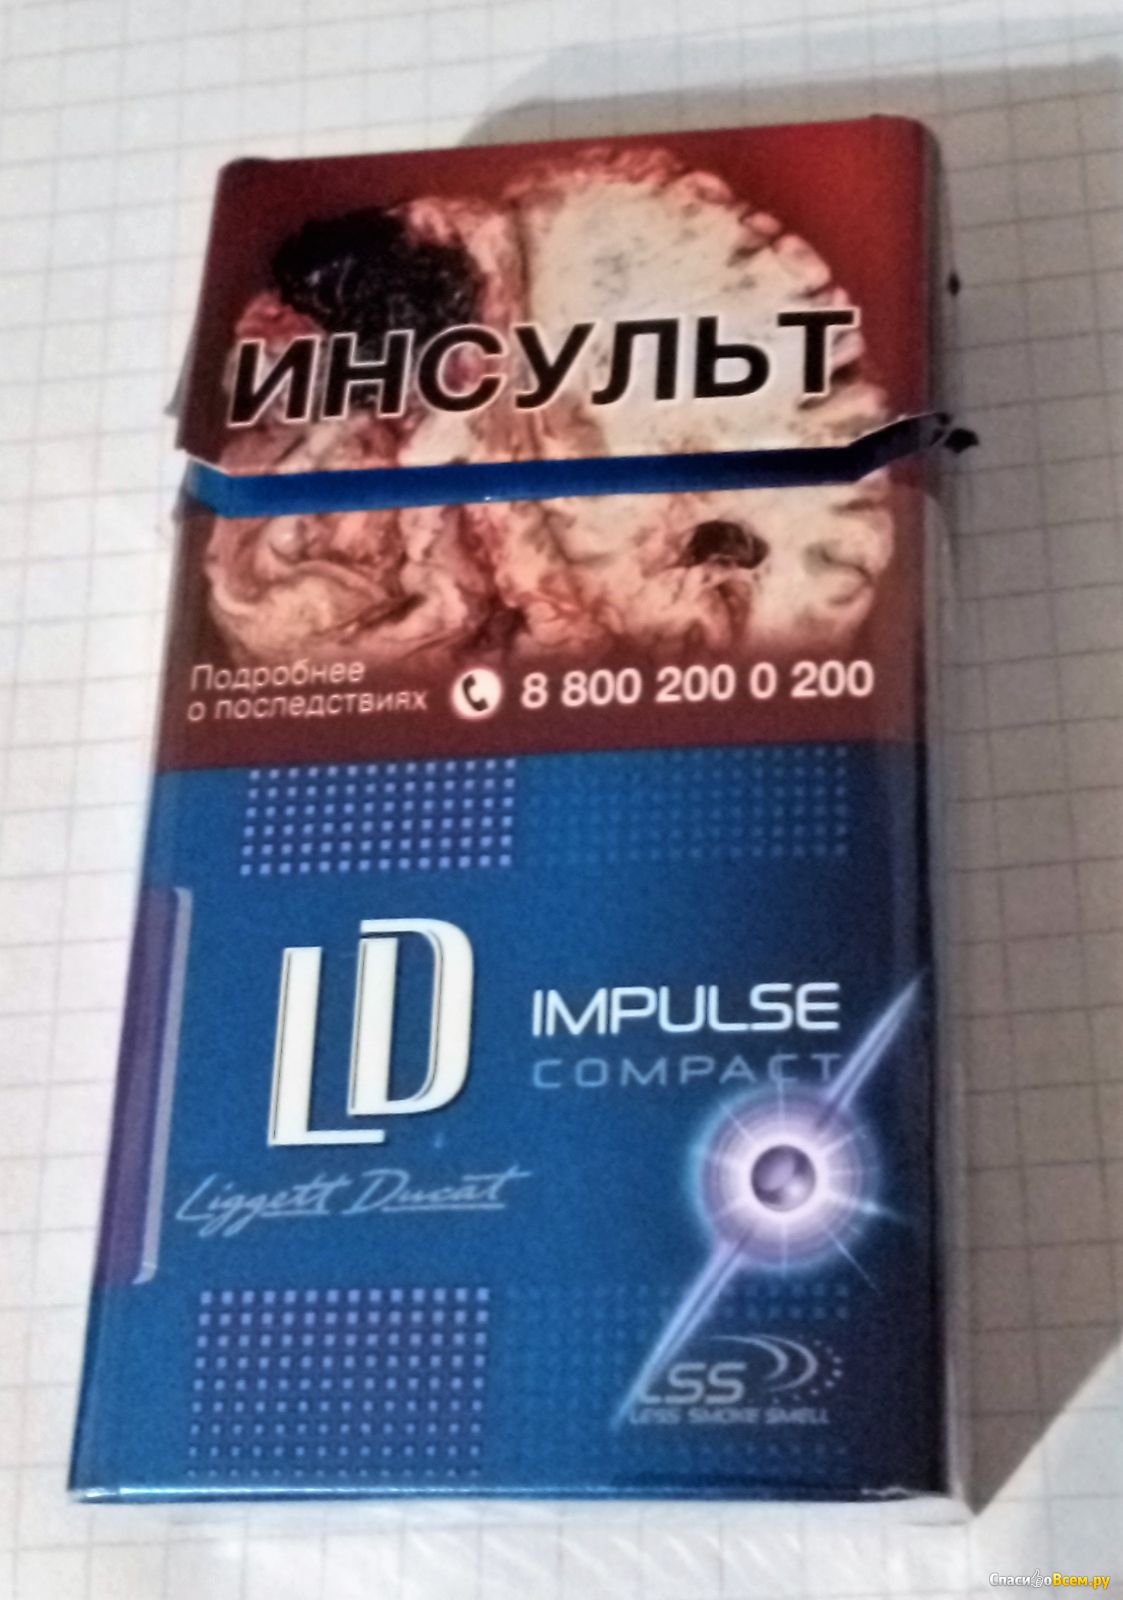 LD Impulse Compact